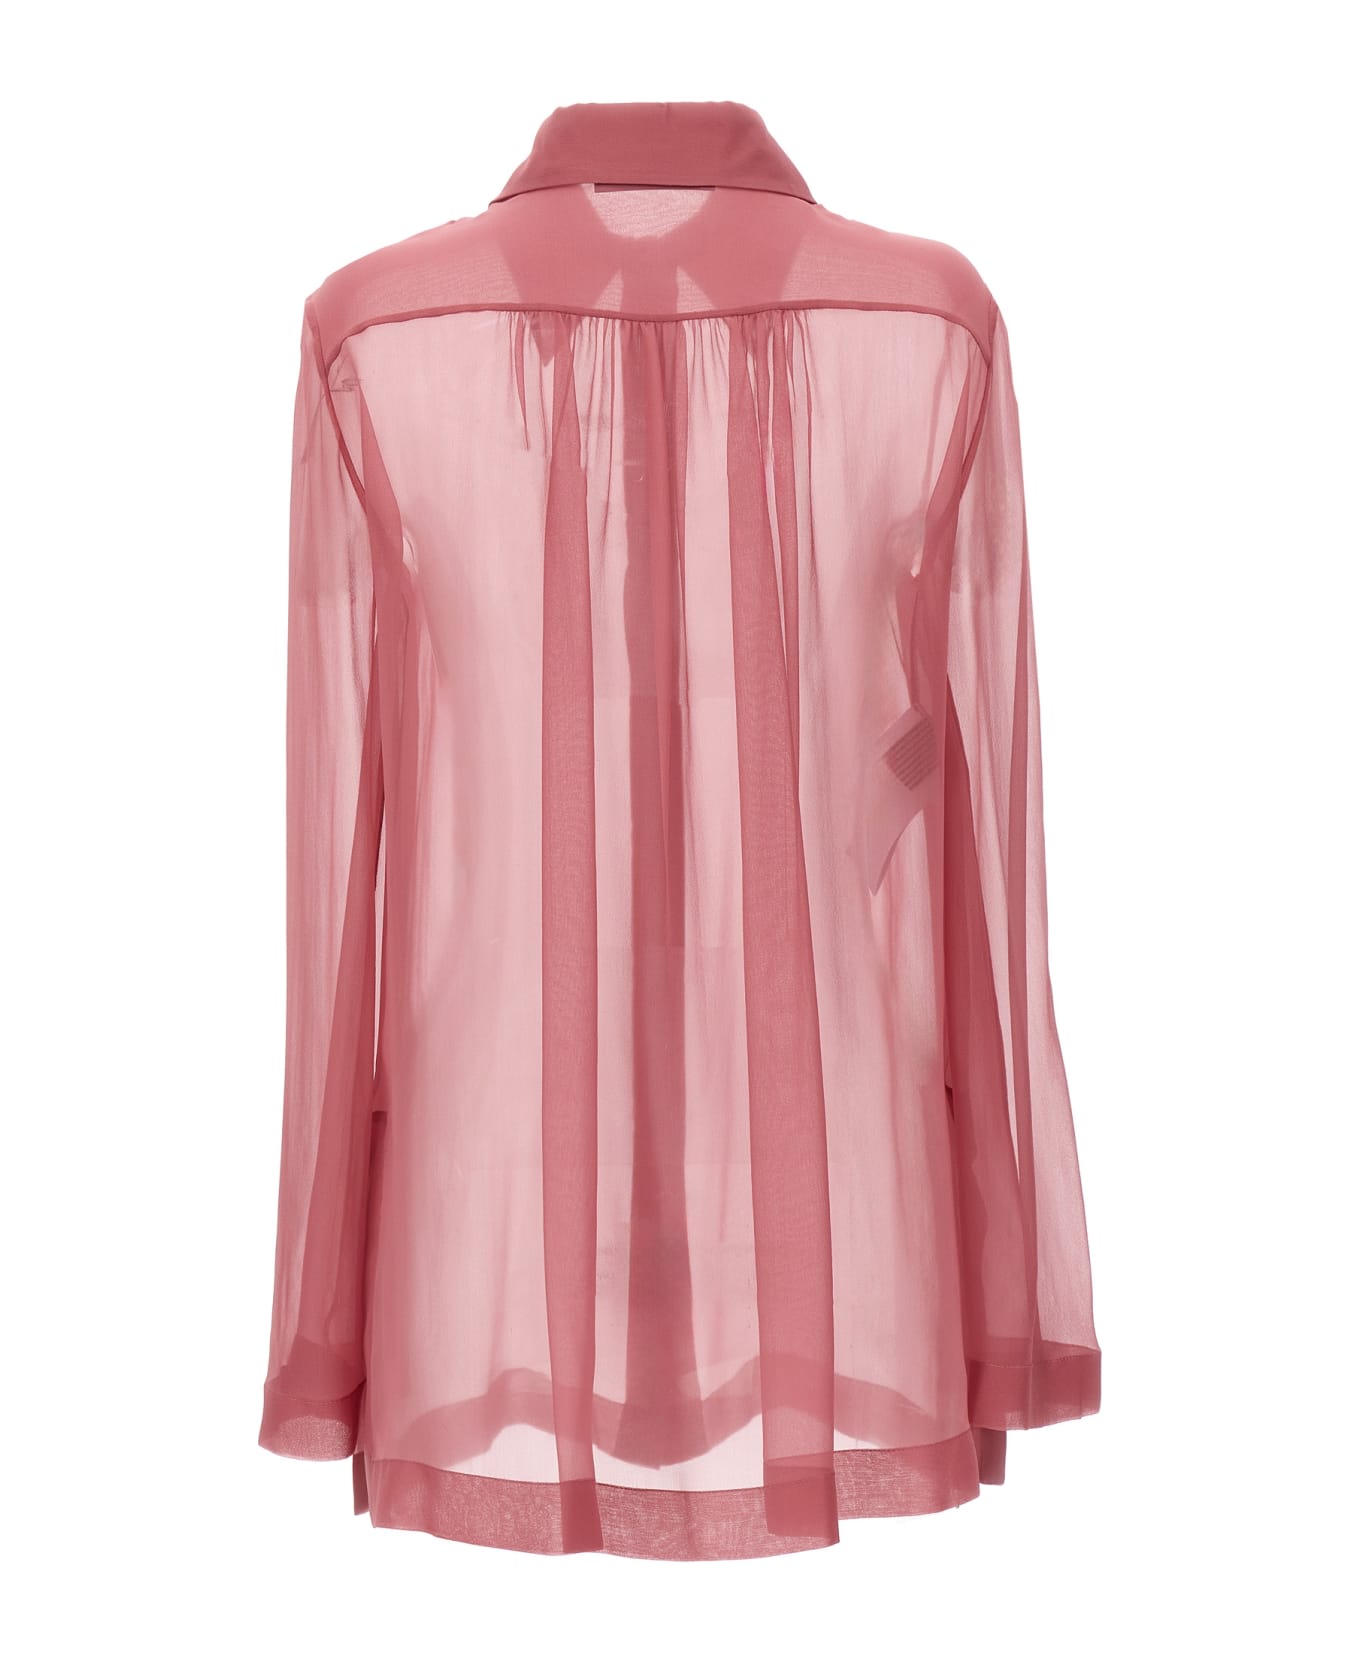 Alberta Ferretti Sheer Silk Shirt - Pink シャツ